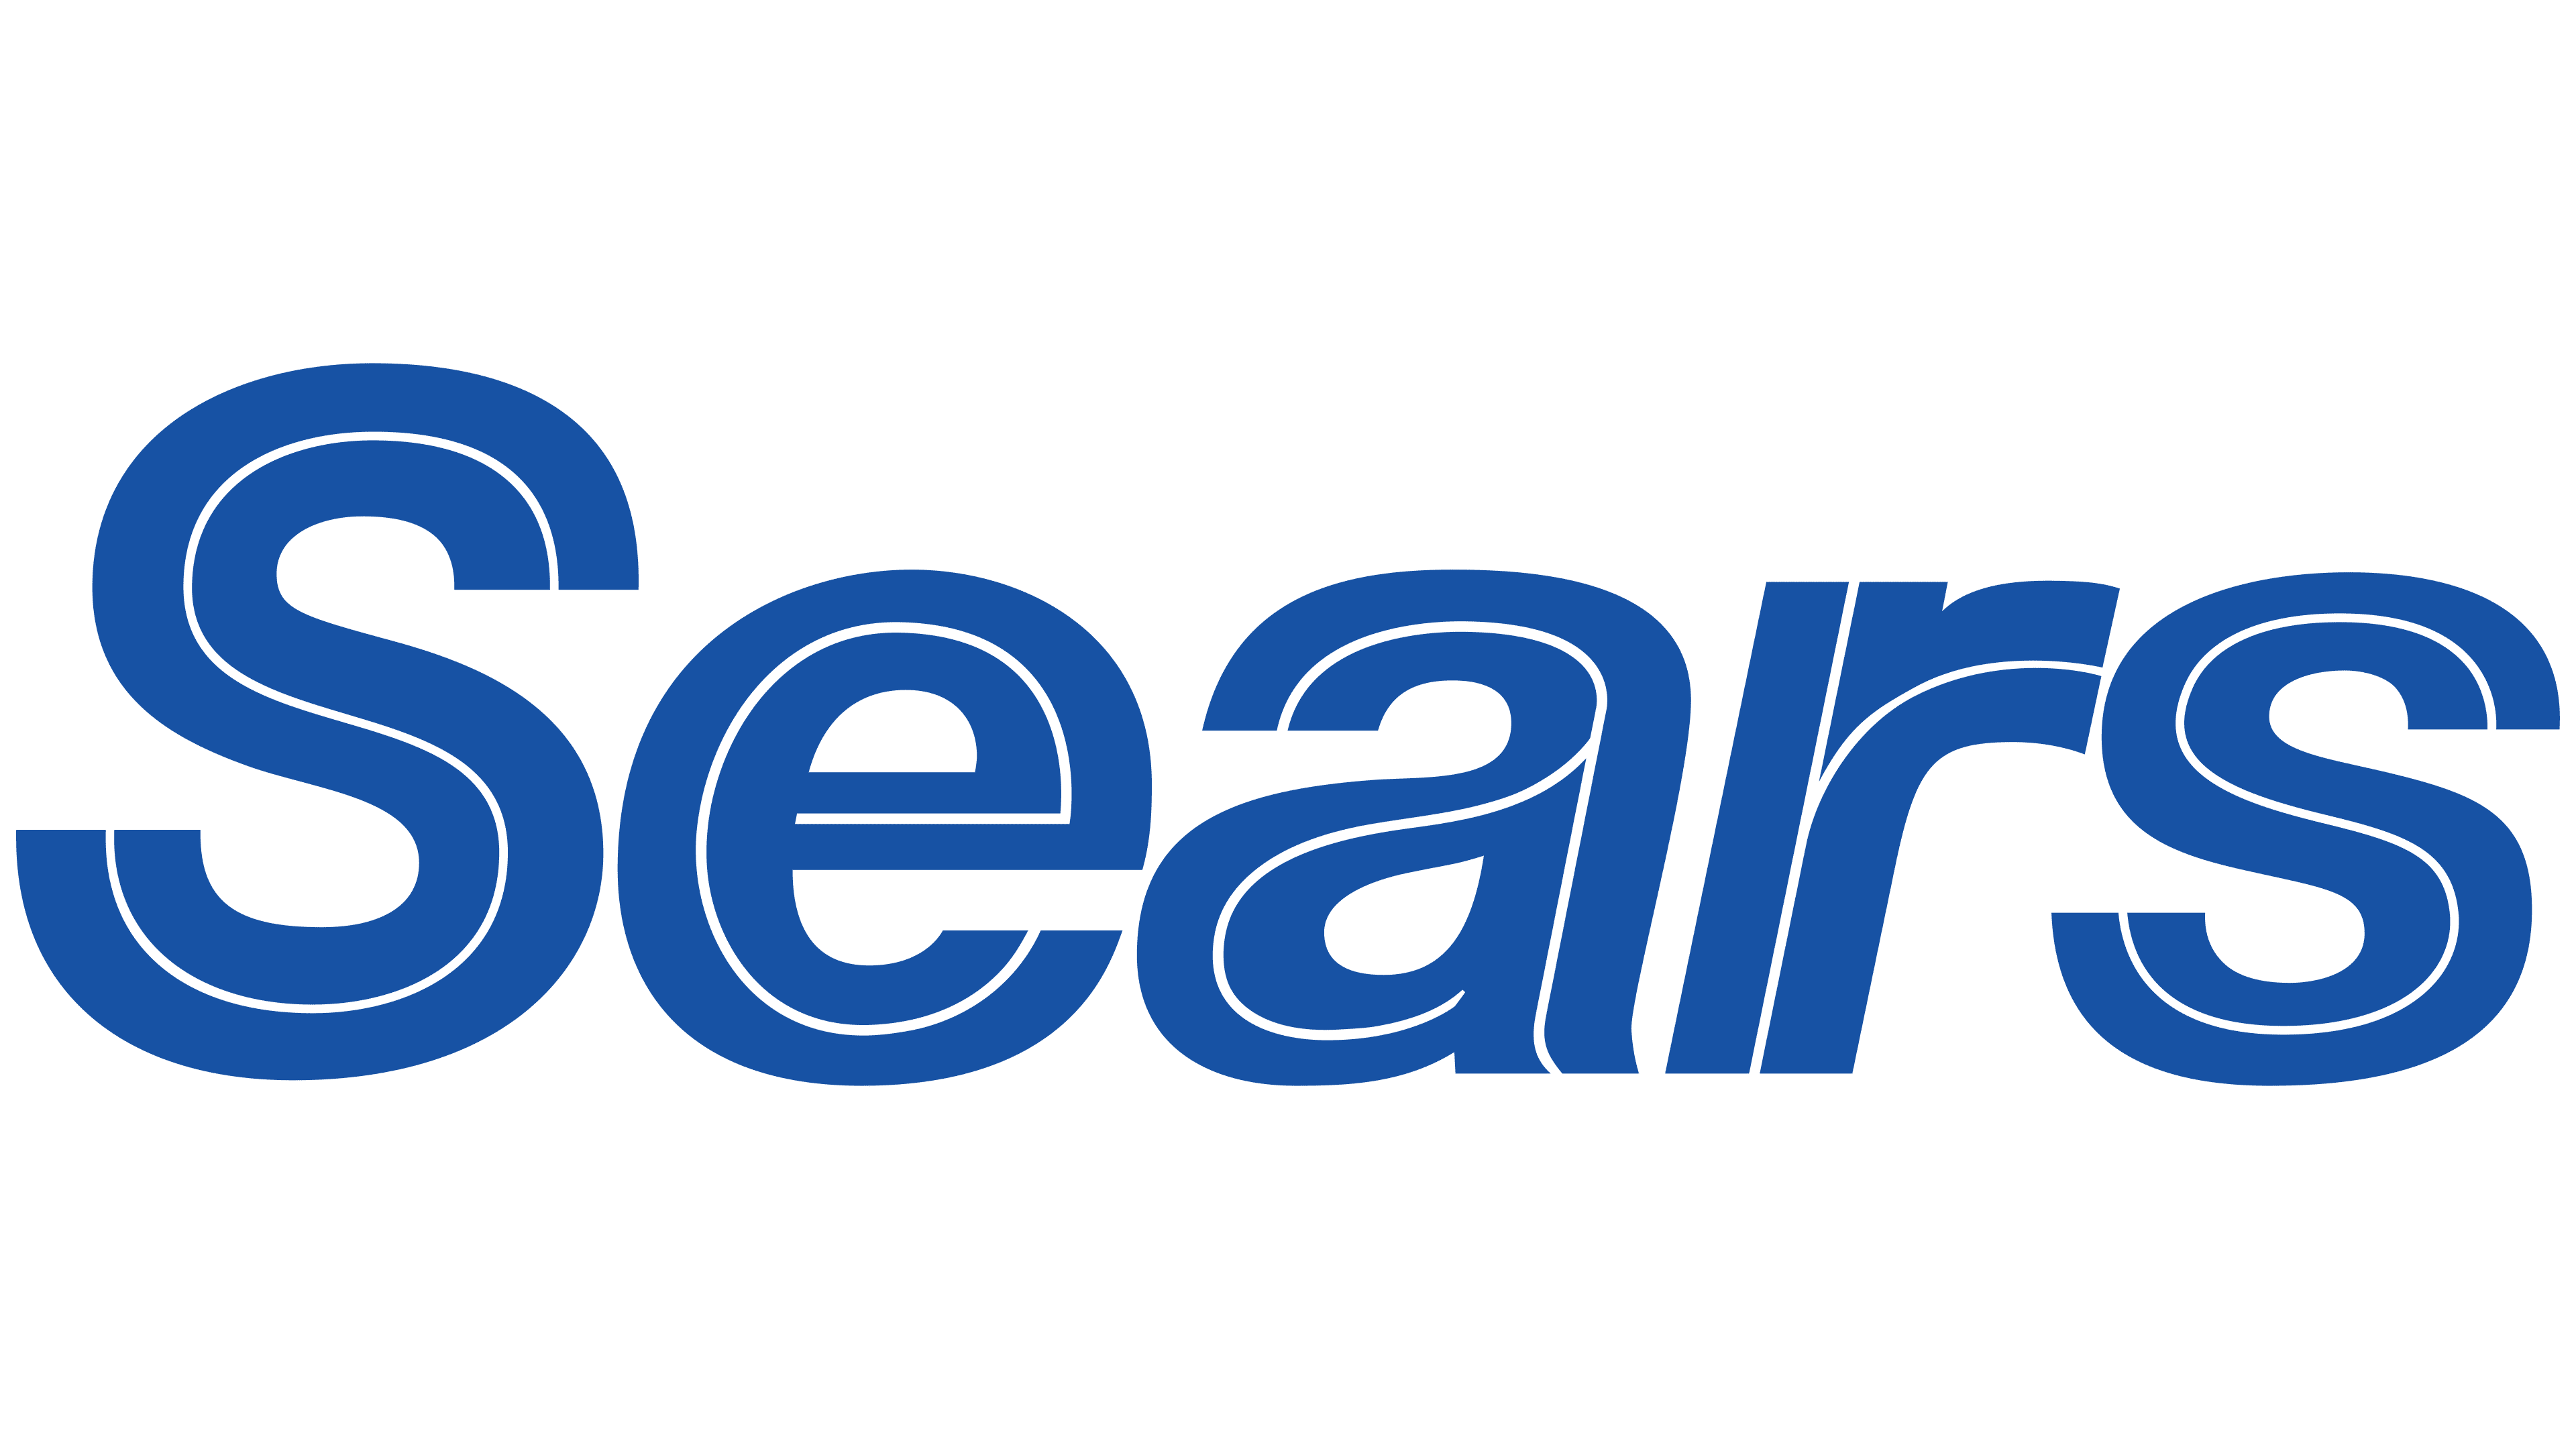 Current Sears Logo